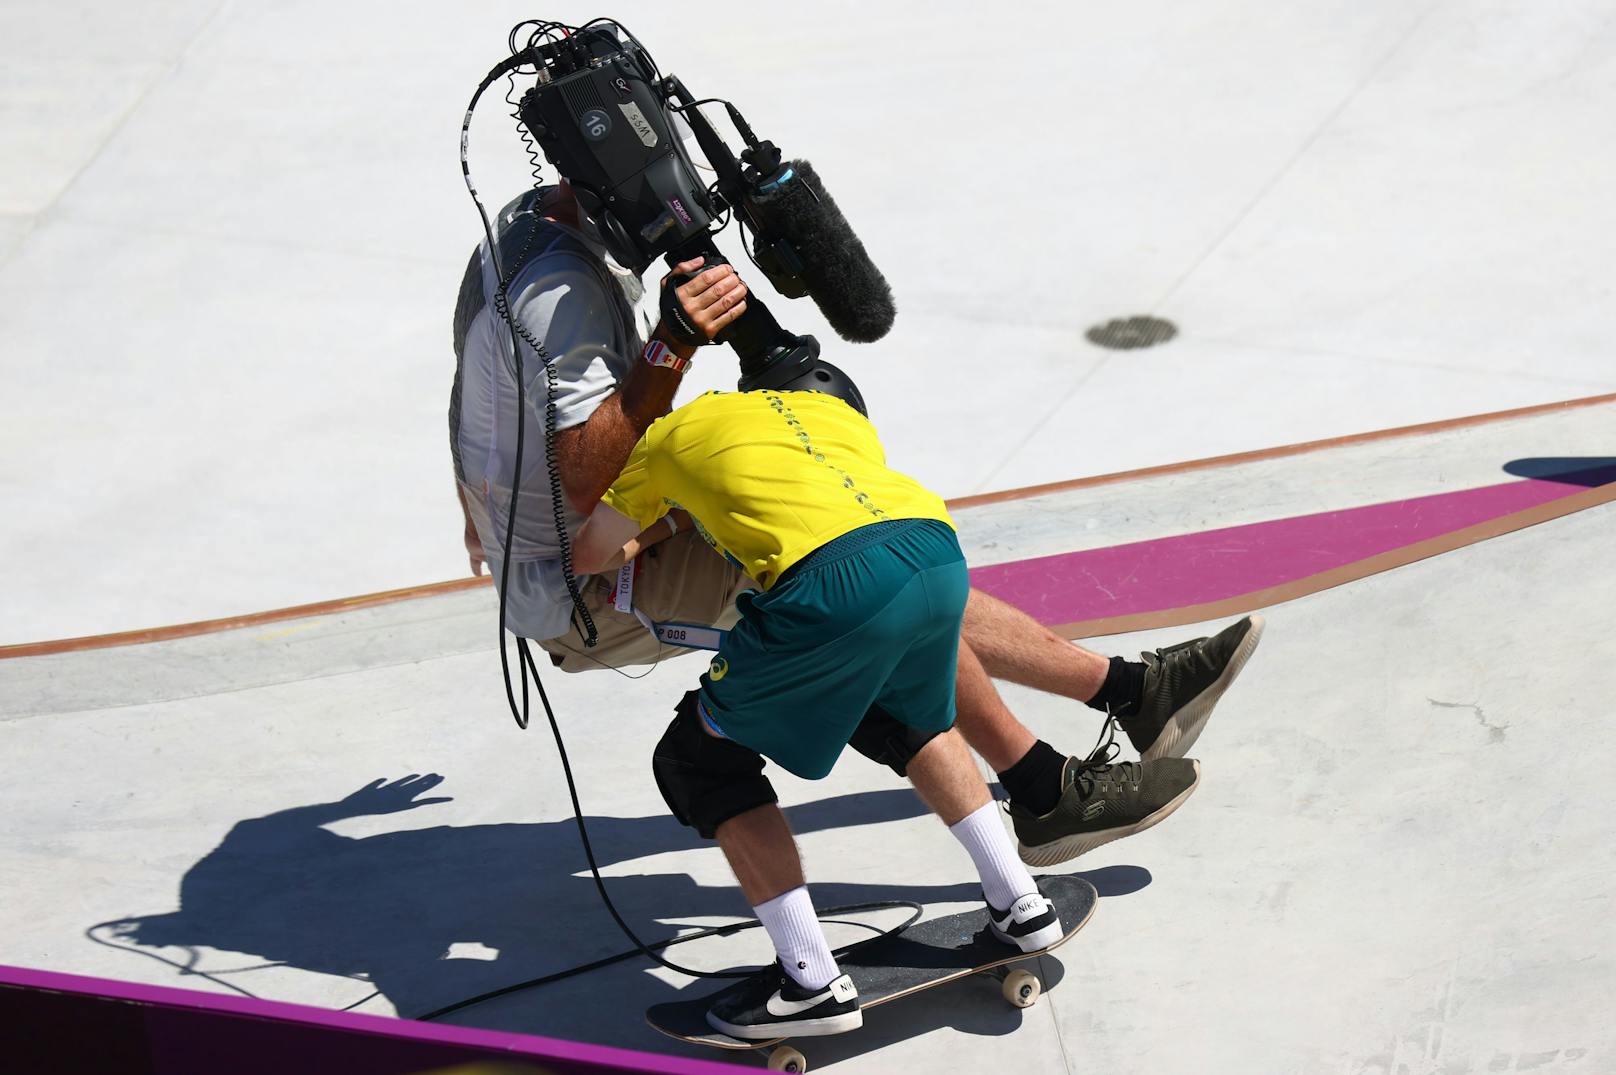 Skateboard-Crash bei Olympia